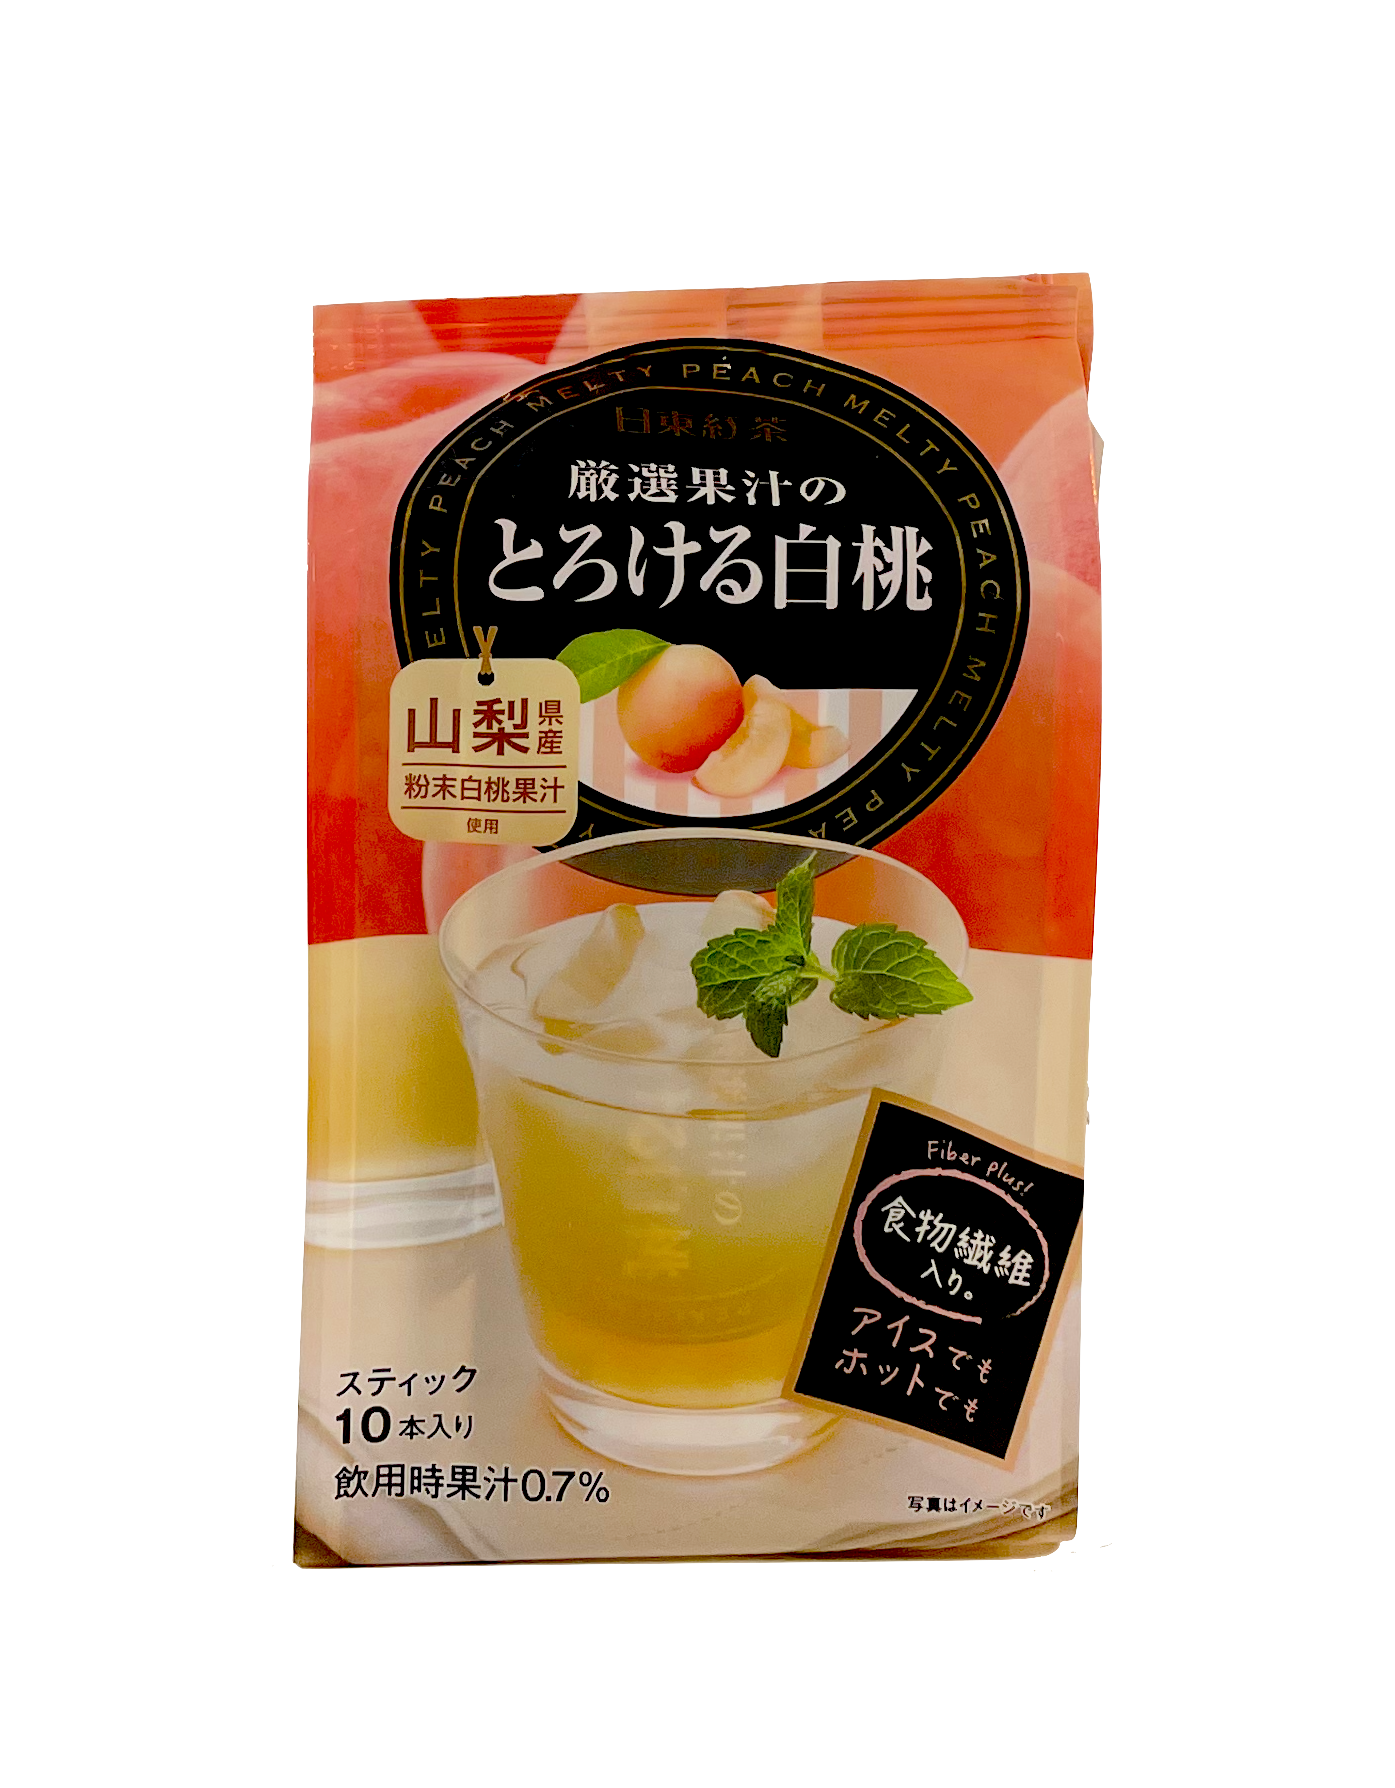 Instant Peach Juice 95g Nitto Japan